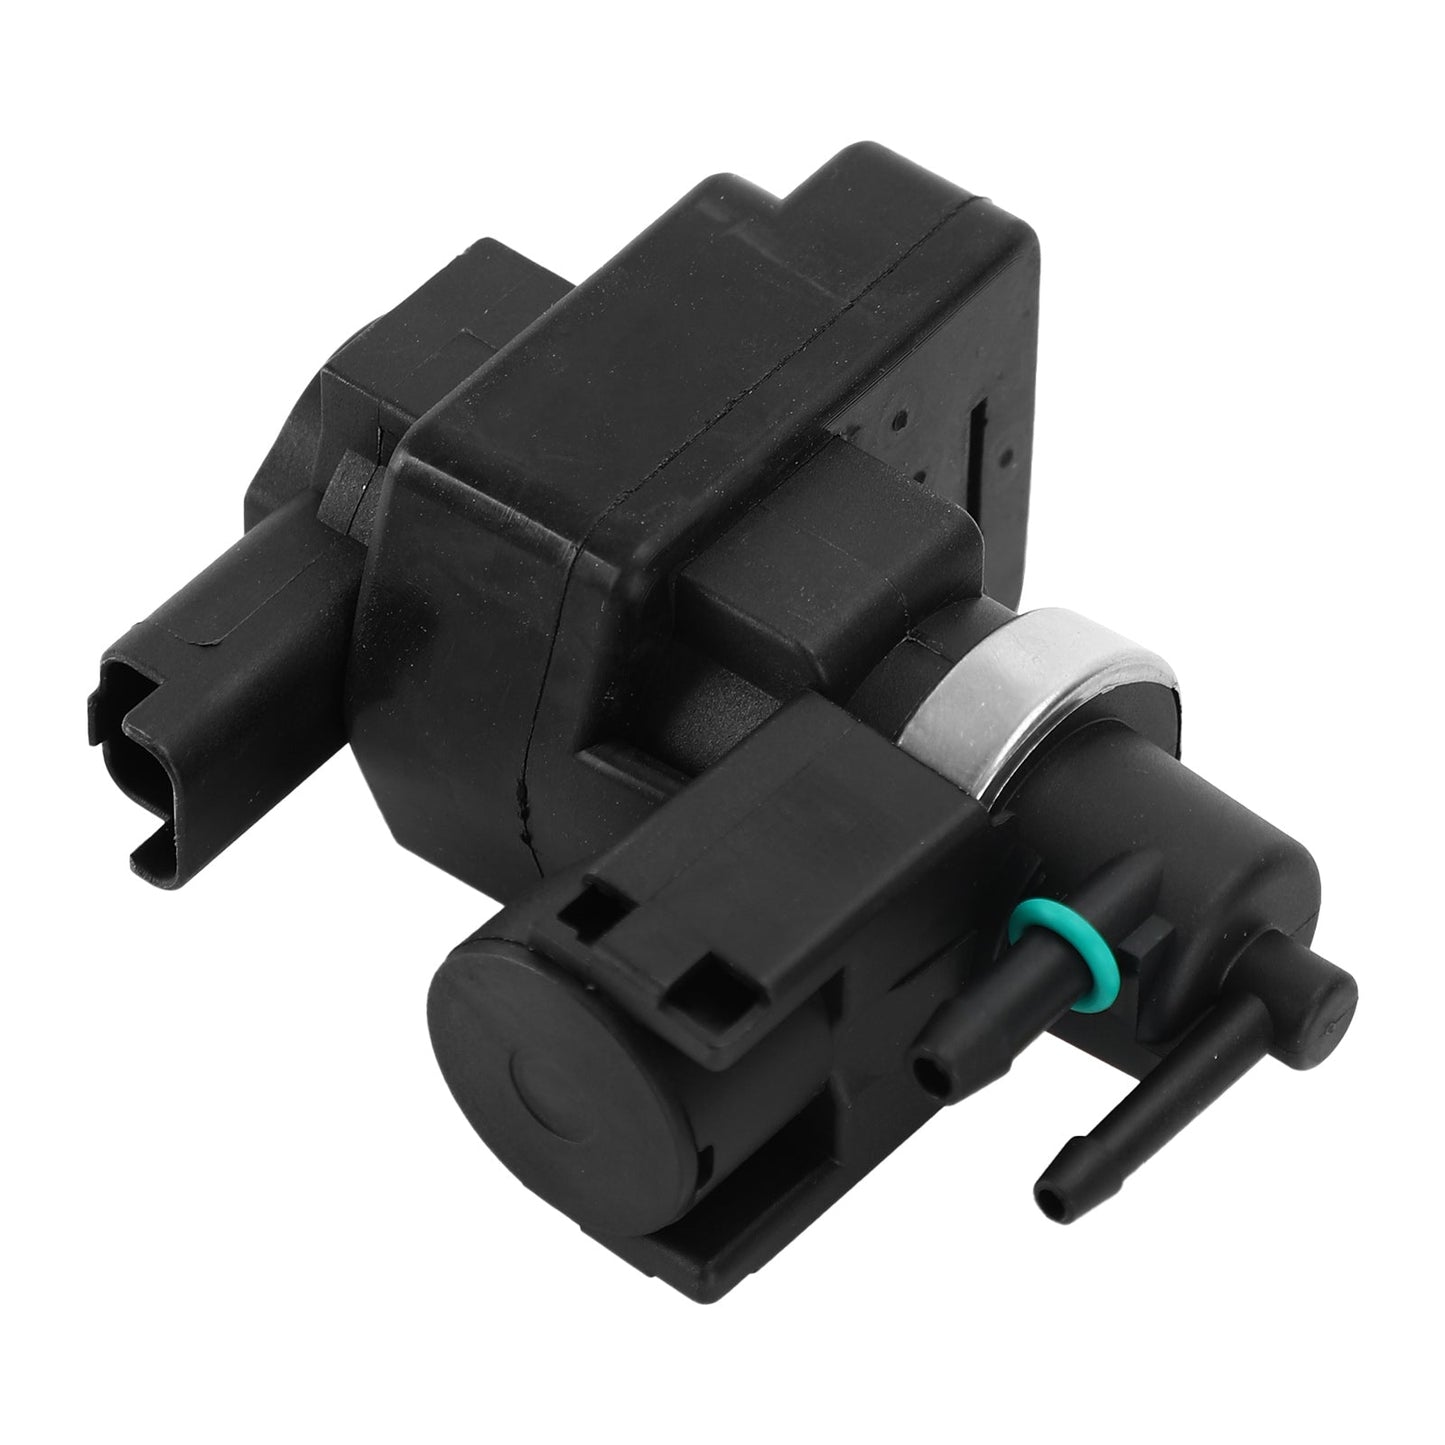 Turbolader Boost Magnetventil für Mini Cooper R56 55 57 58 59 60 11657599547